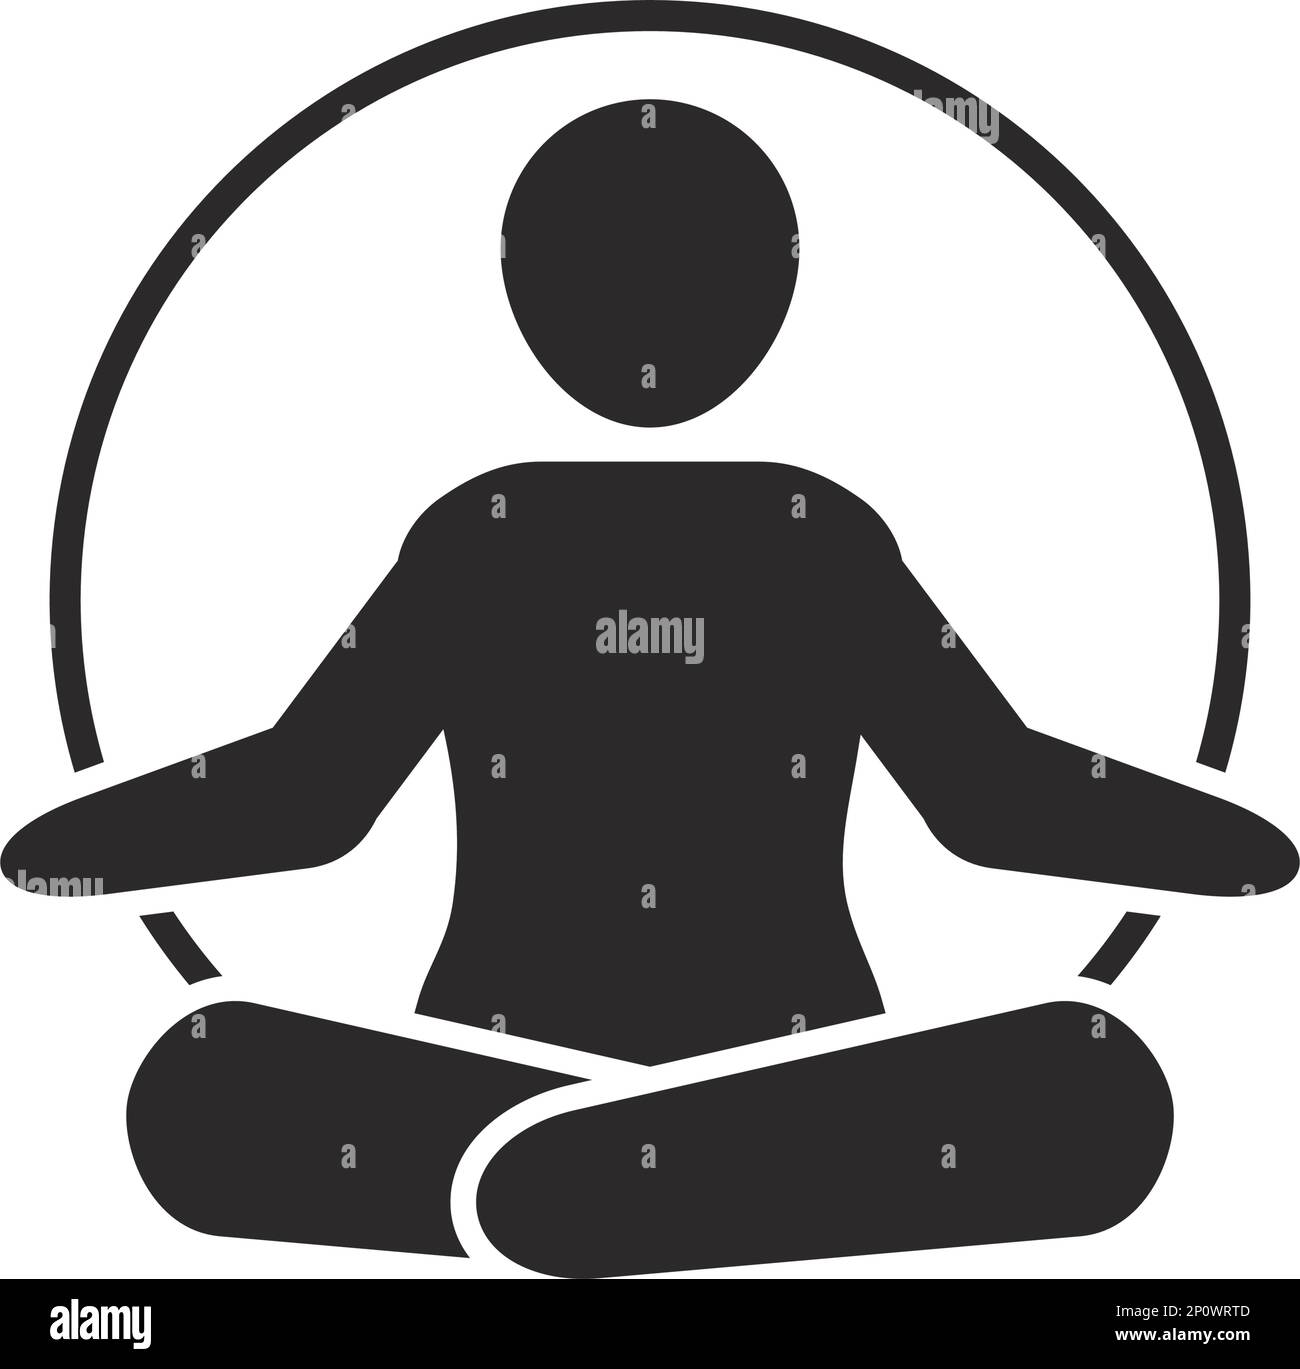 Yoga position linear icon. Thin line illustration. Yoga class